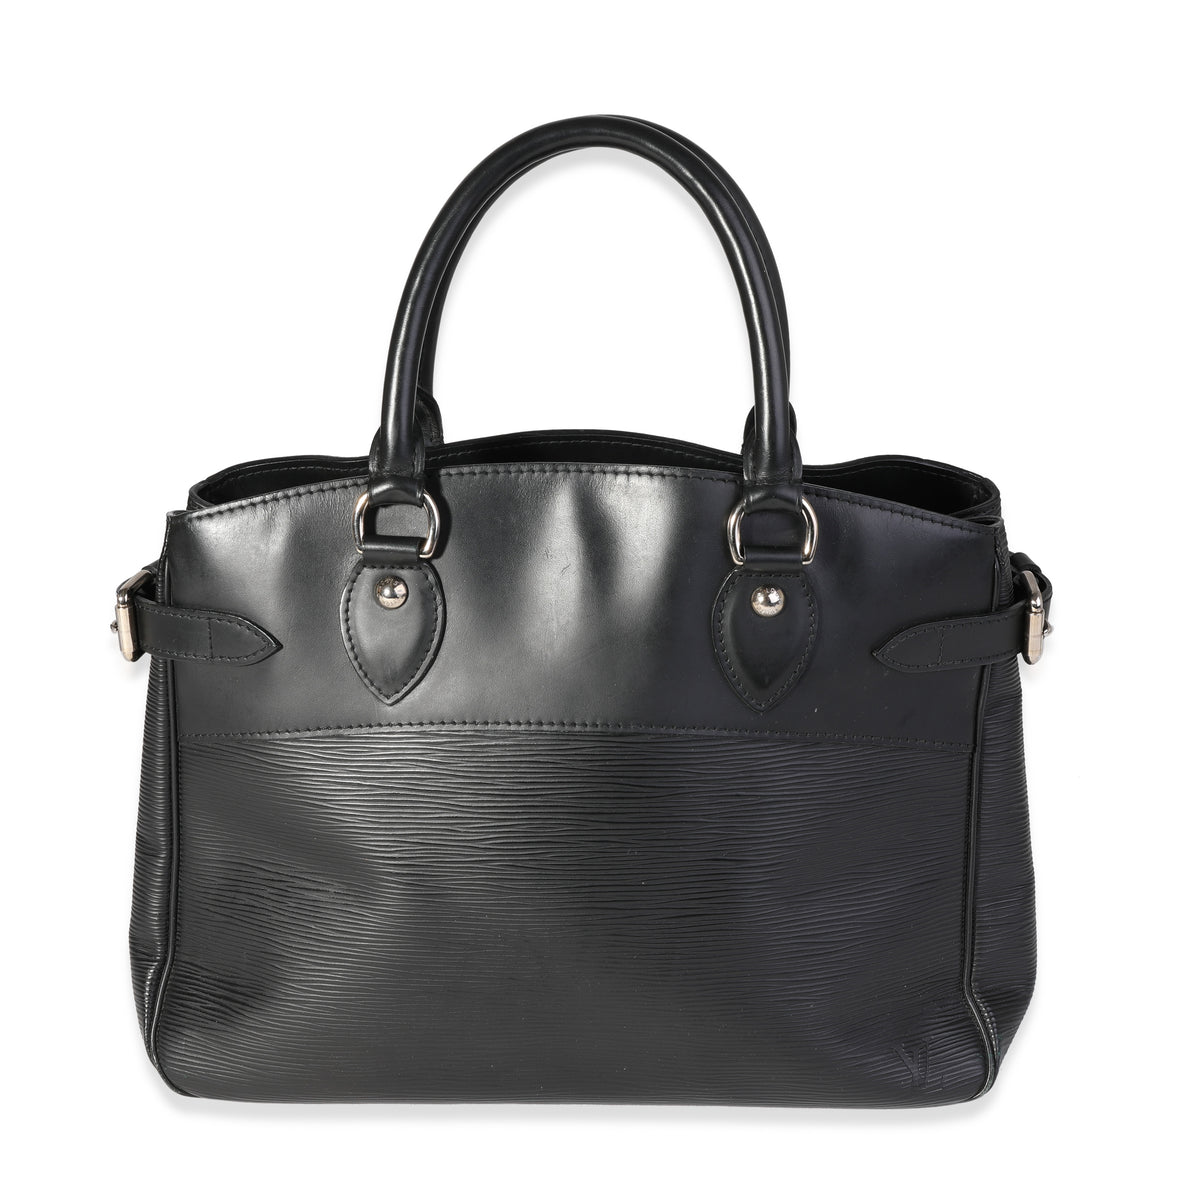 Louis Vuitton - Black Epi Leather Passy Pm Bag